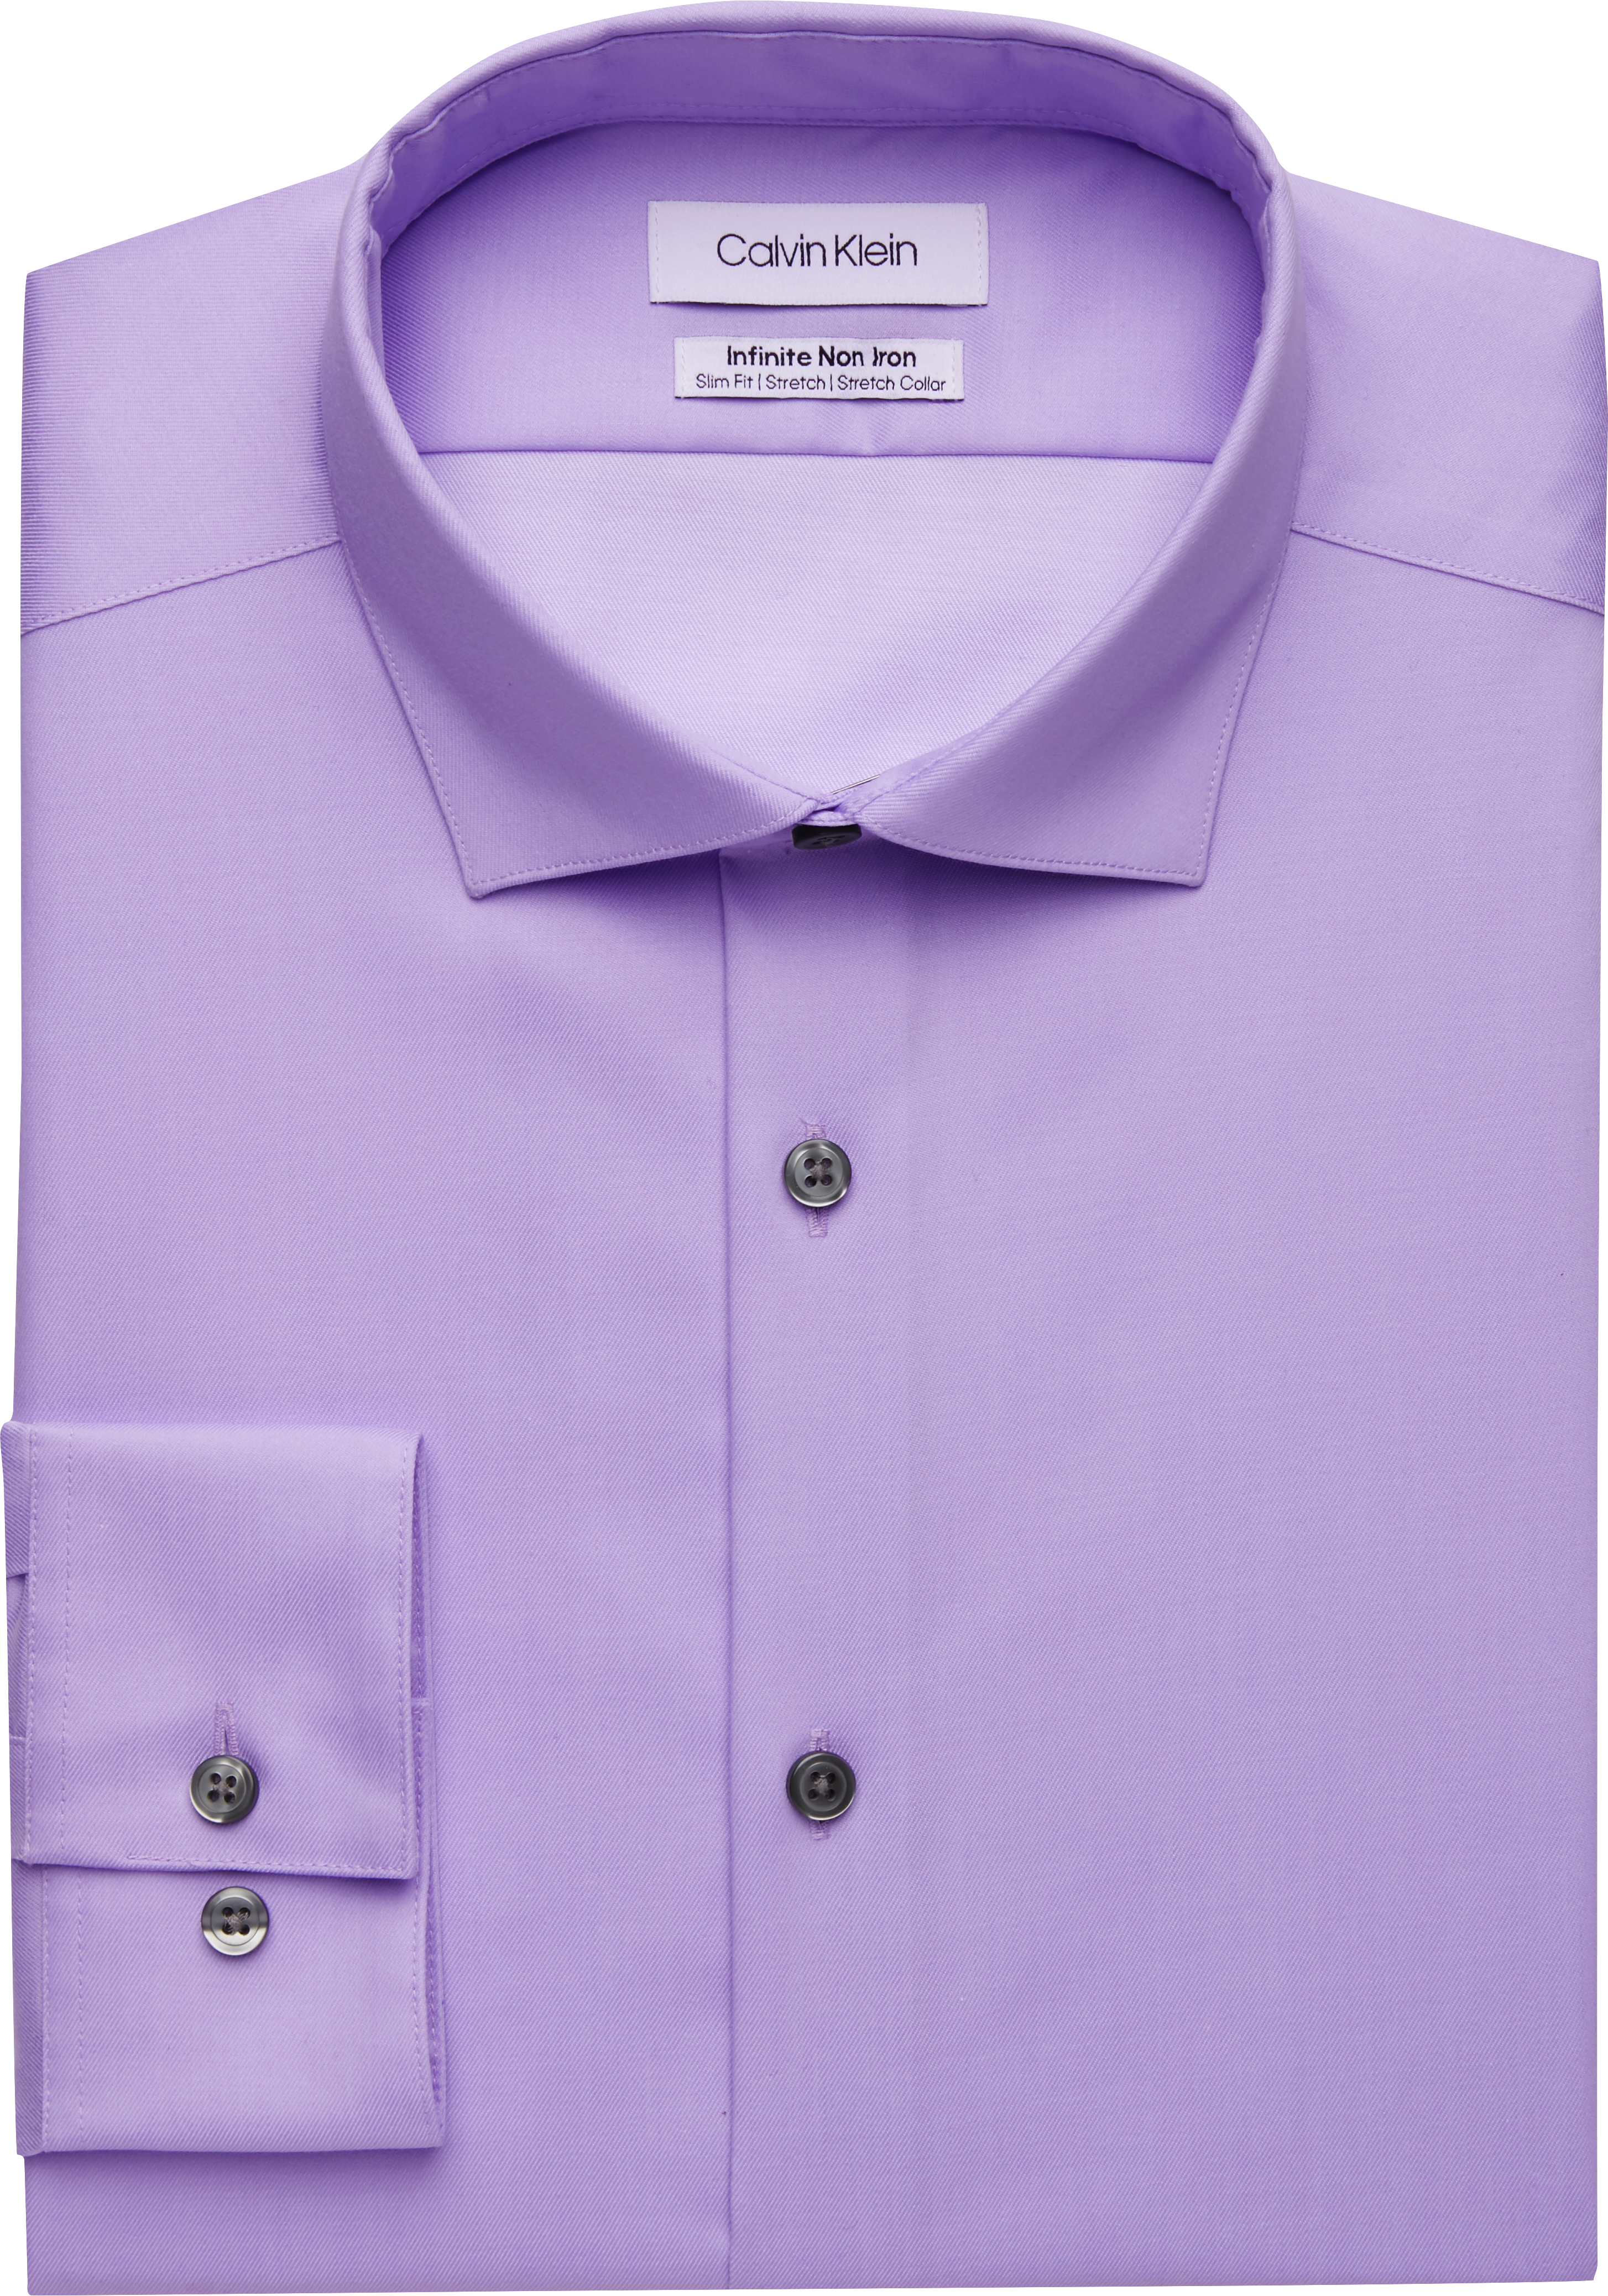 Calvin Klein Infinite Non-Iron Slim Fit Stretch Collar Dress Shirt, Purple  - Men's Featured | Men's